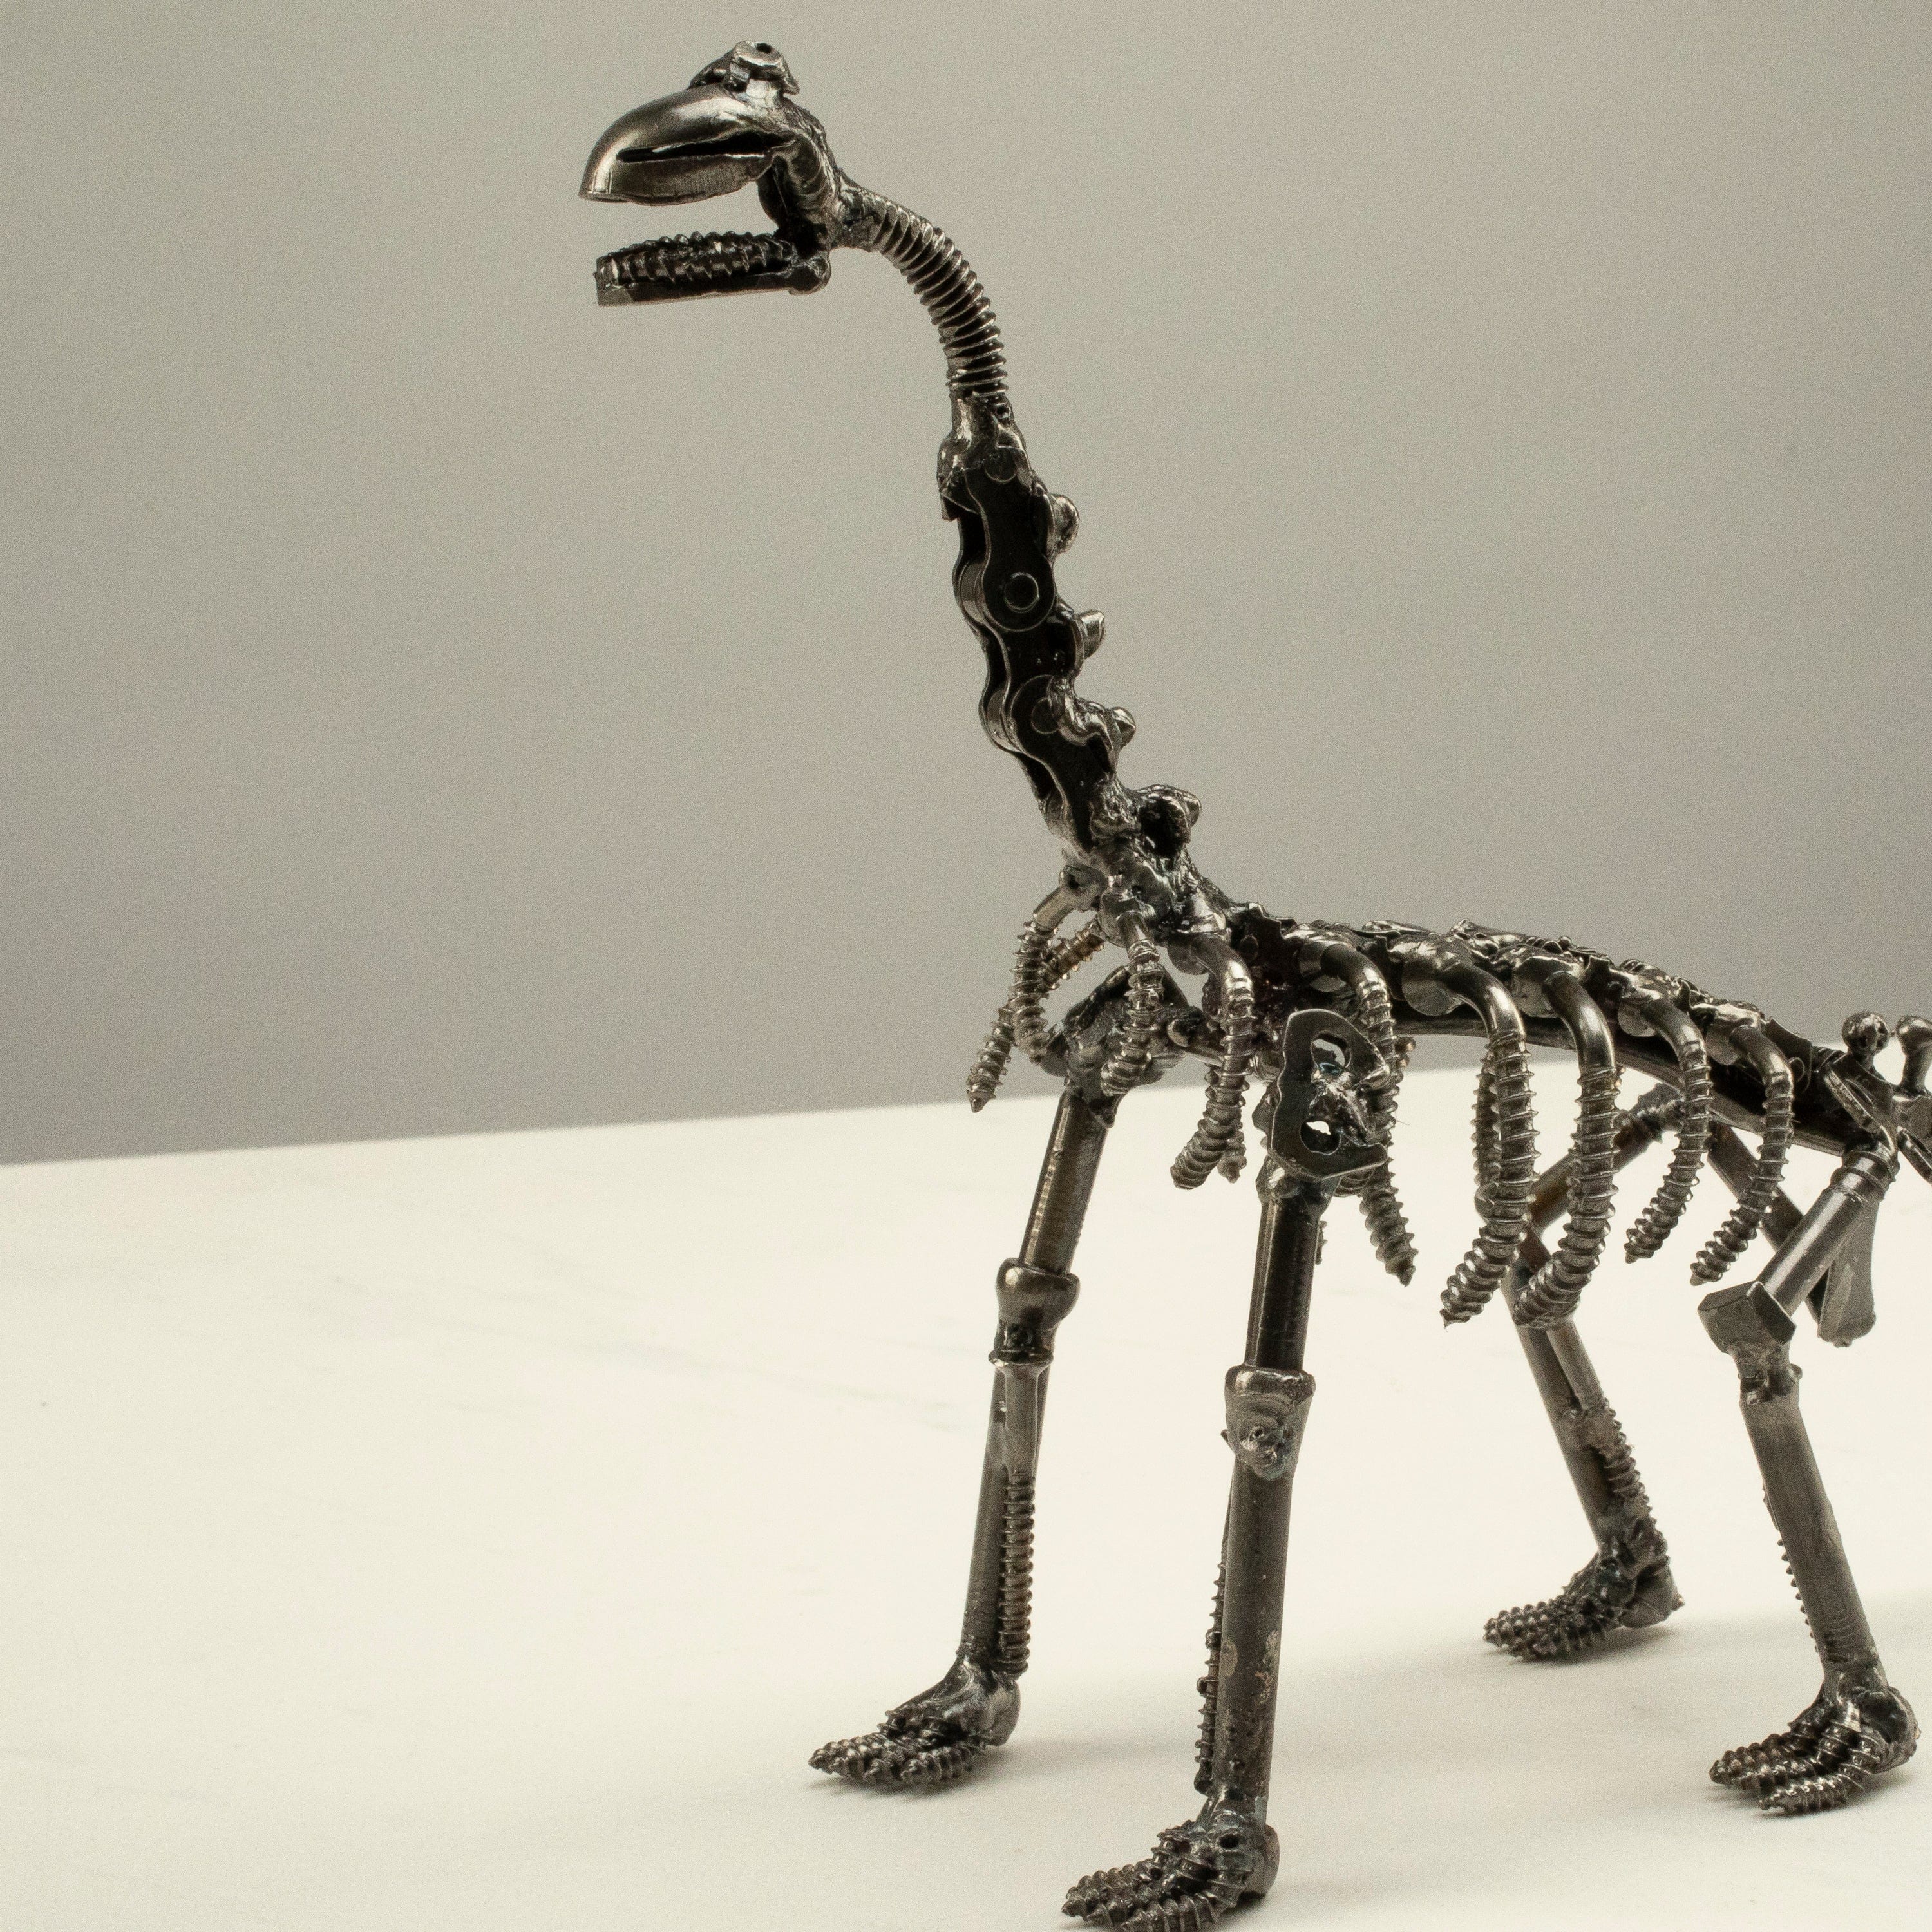 KALIFANO Recycled Metal Art Brachiosaurus Recycled Metal Sculpture RMS-300BRO-N